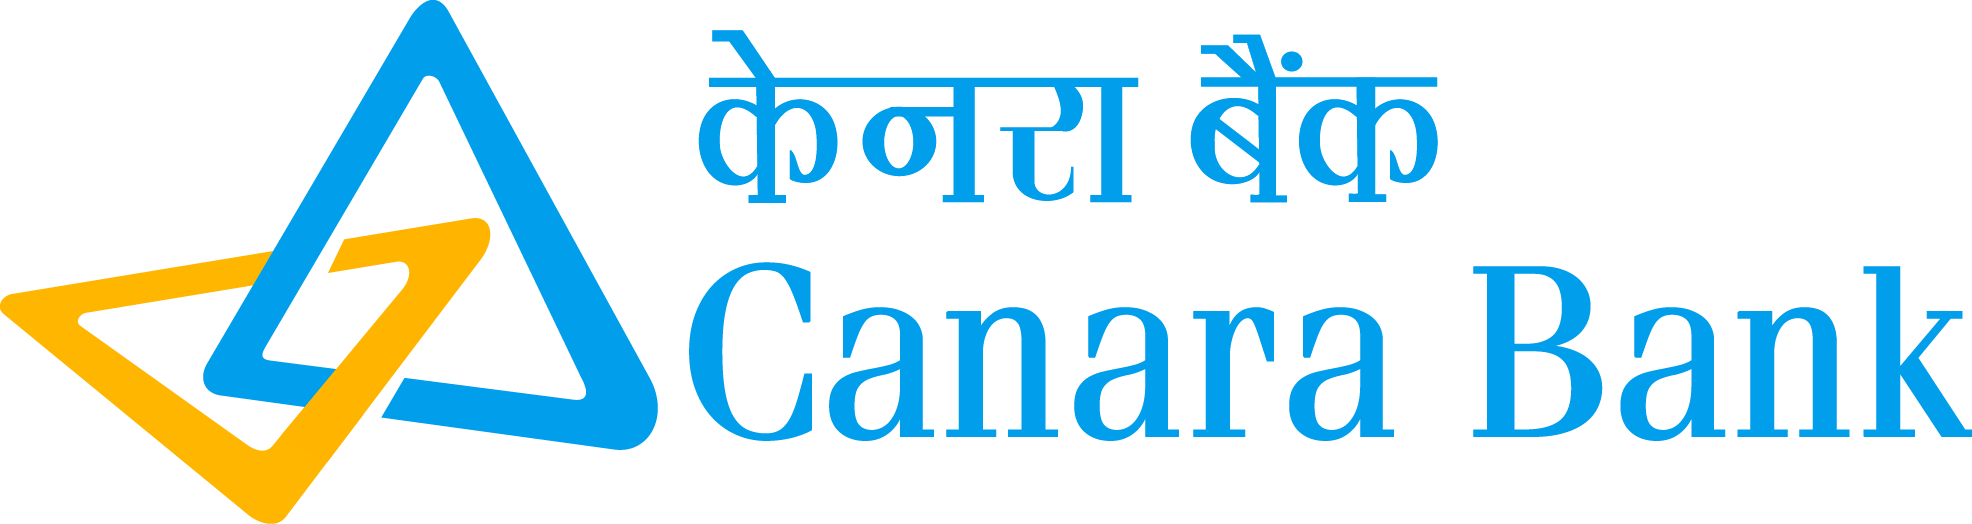 Canara_Bank